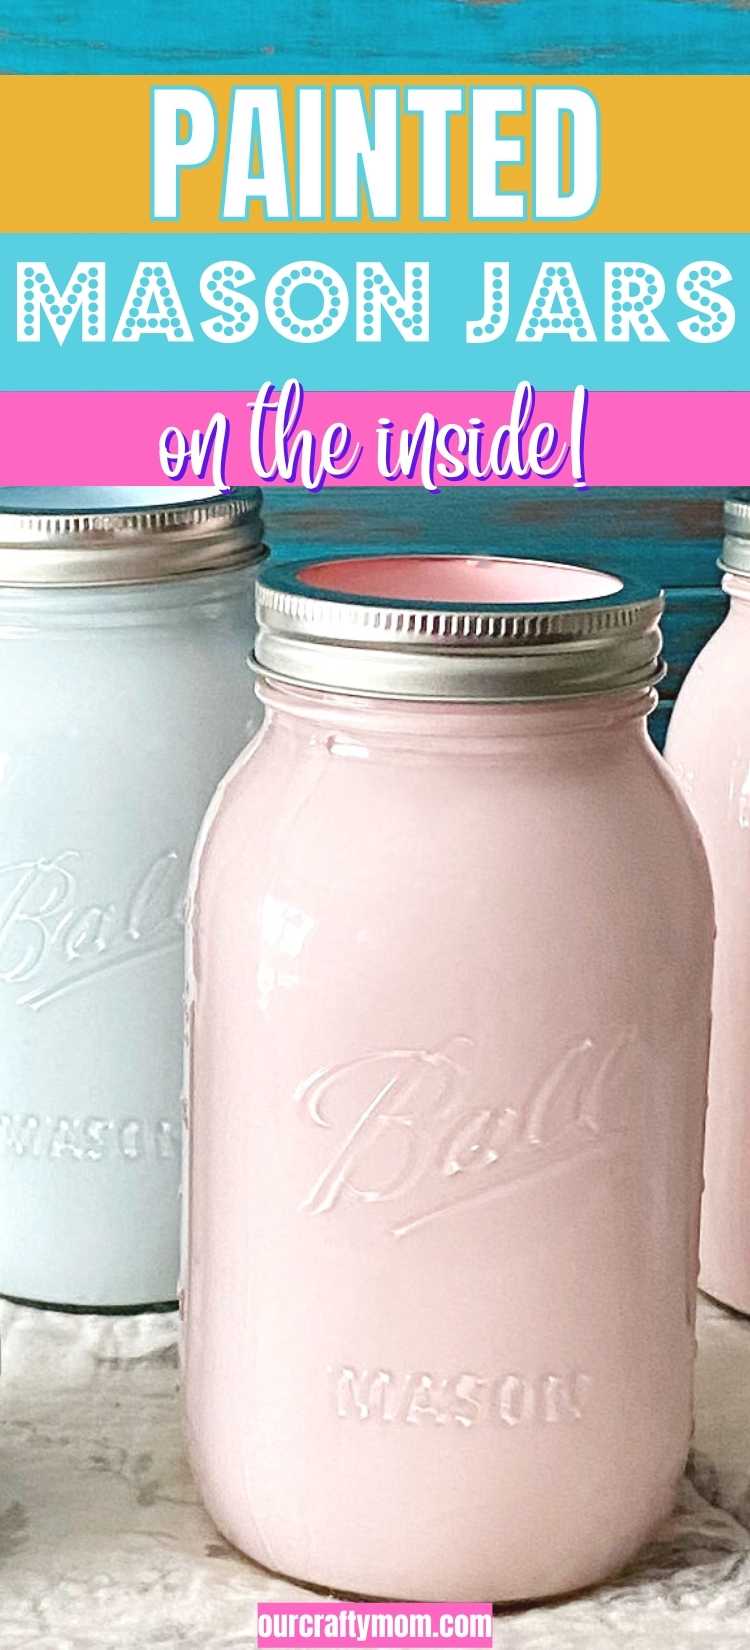 painted mason jars pink and blue